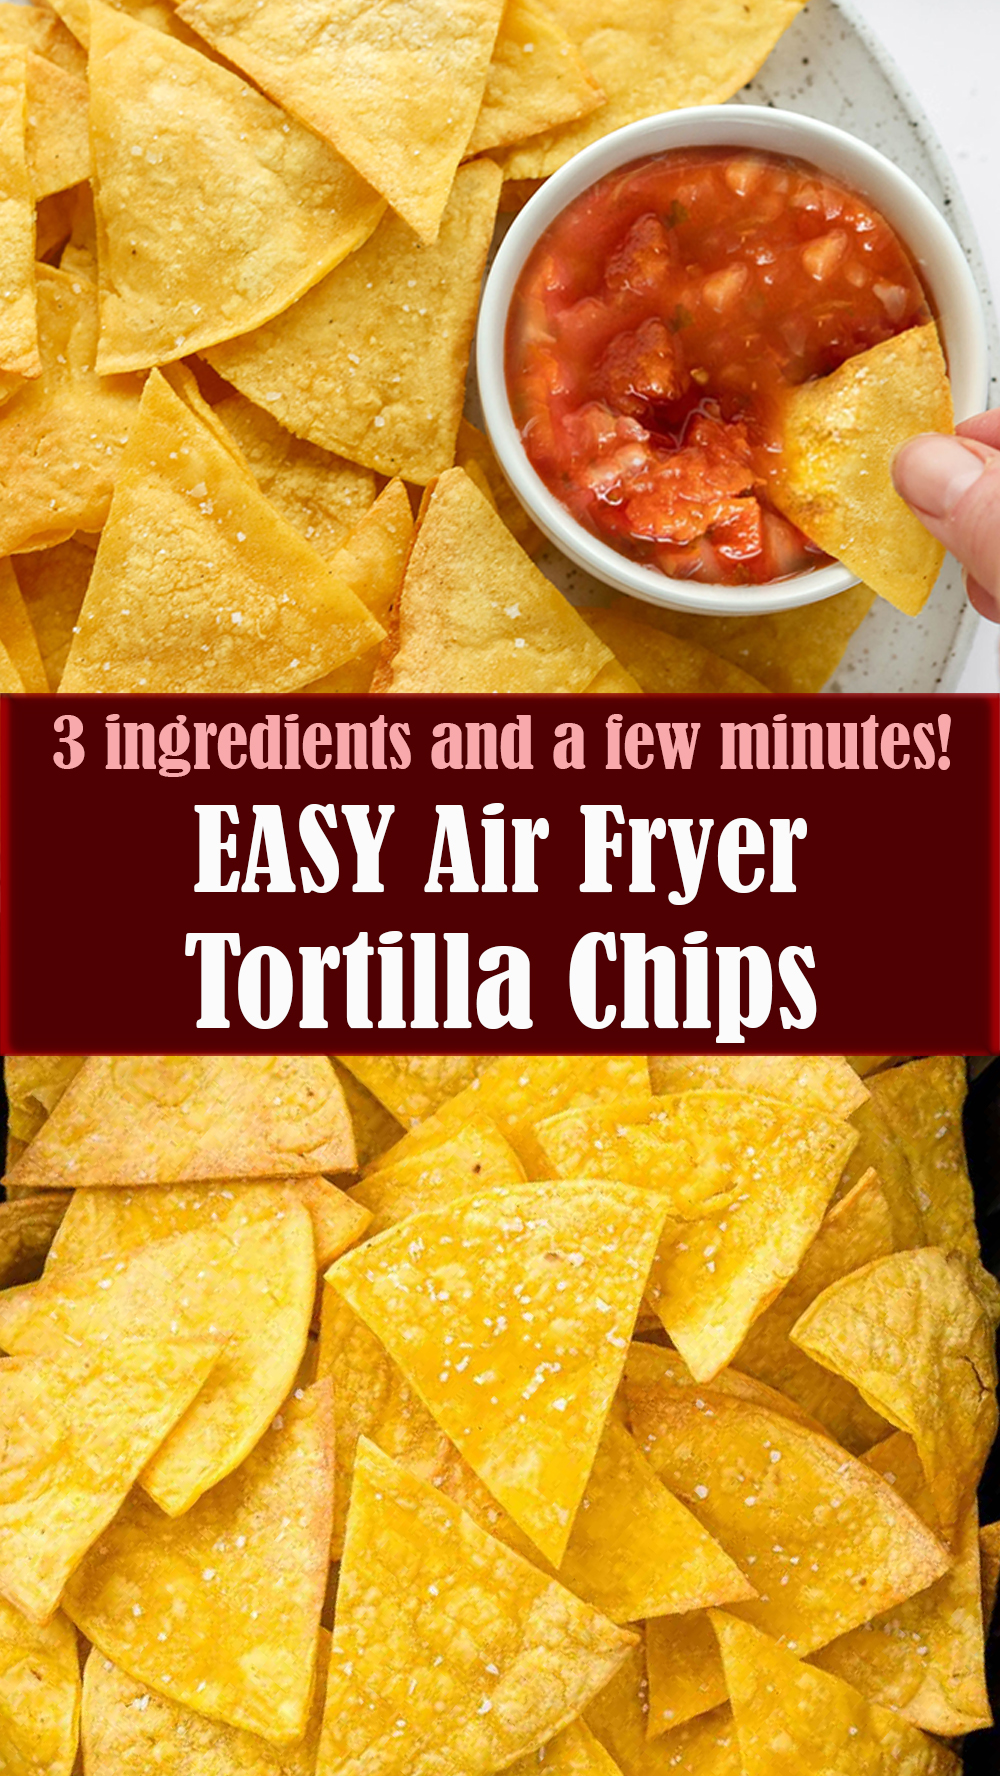 EASY Air Fryer Tortilla Chips